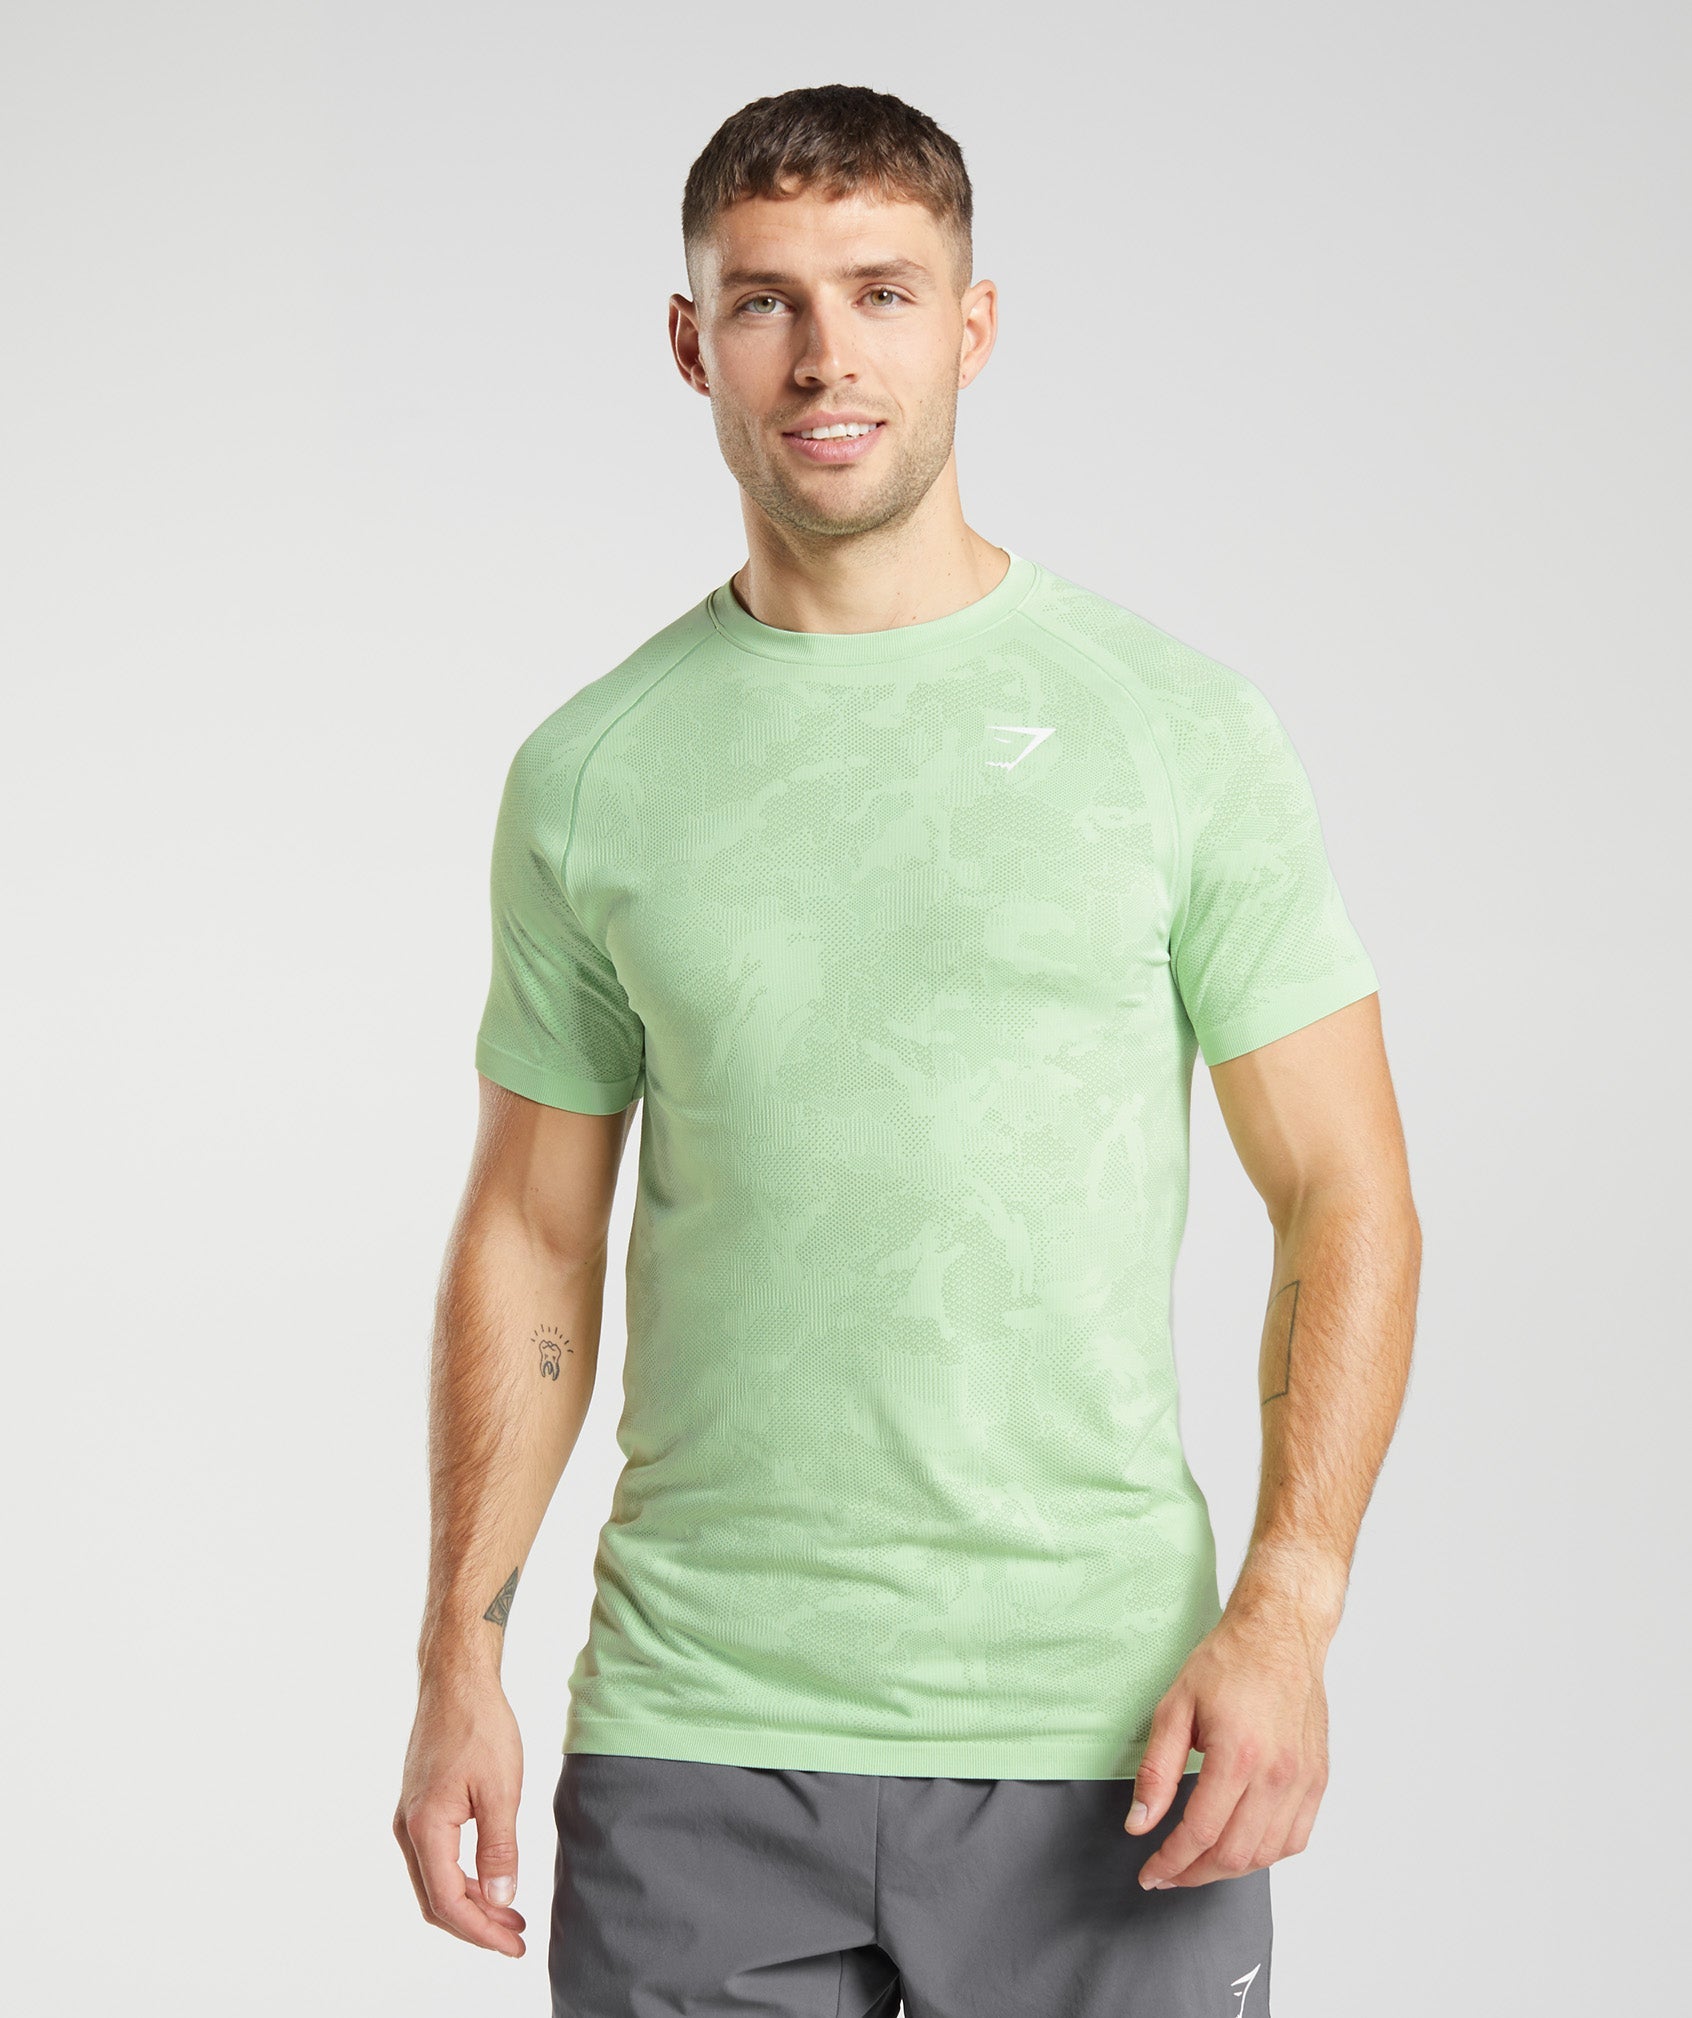 Geo Seamless T-Shirt in Aloe Green/Tea Green - view 1